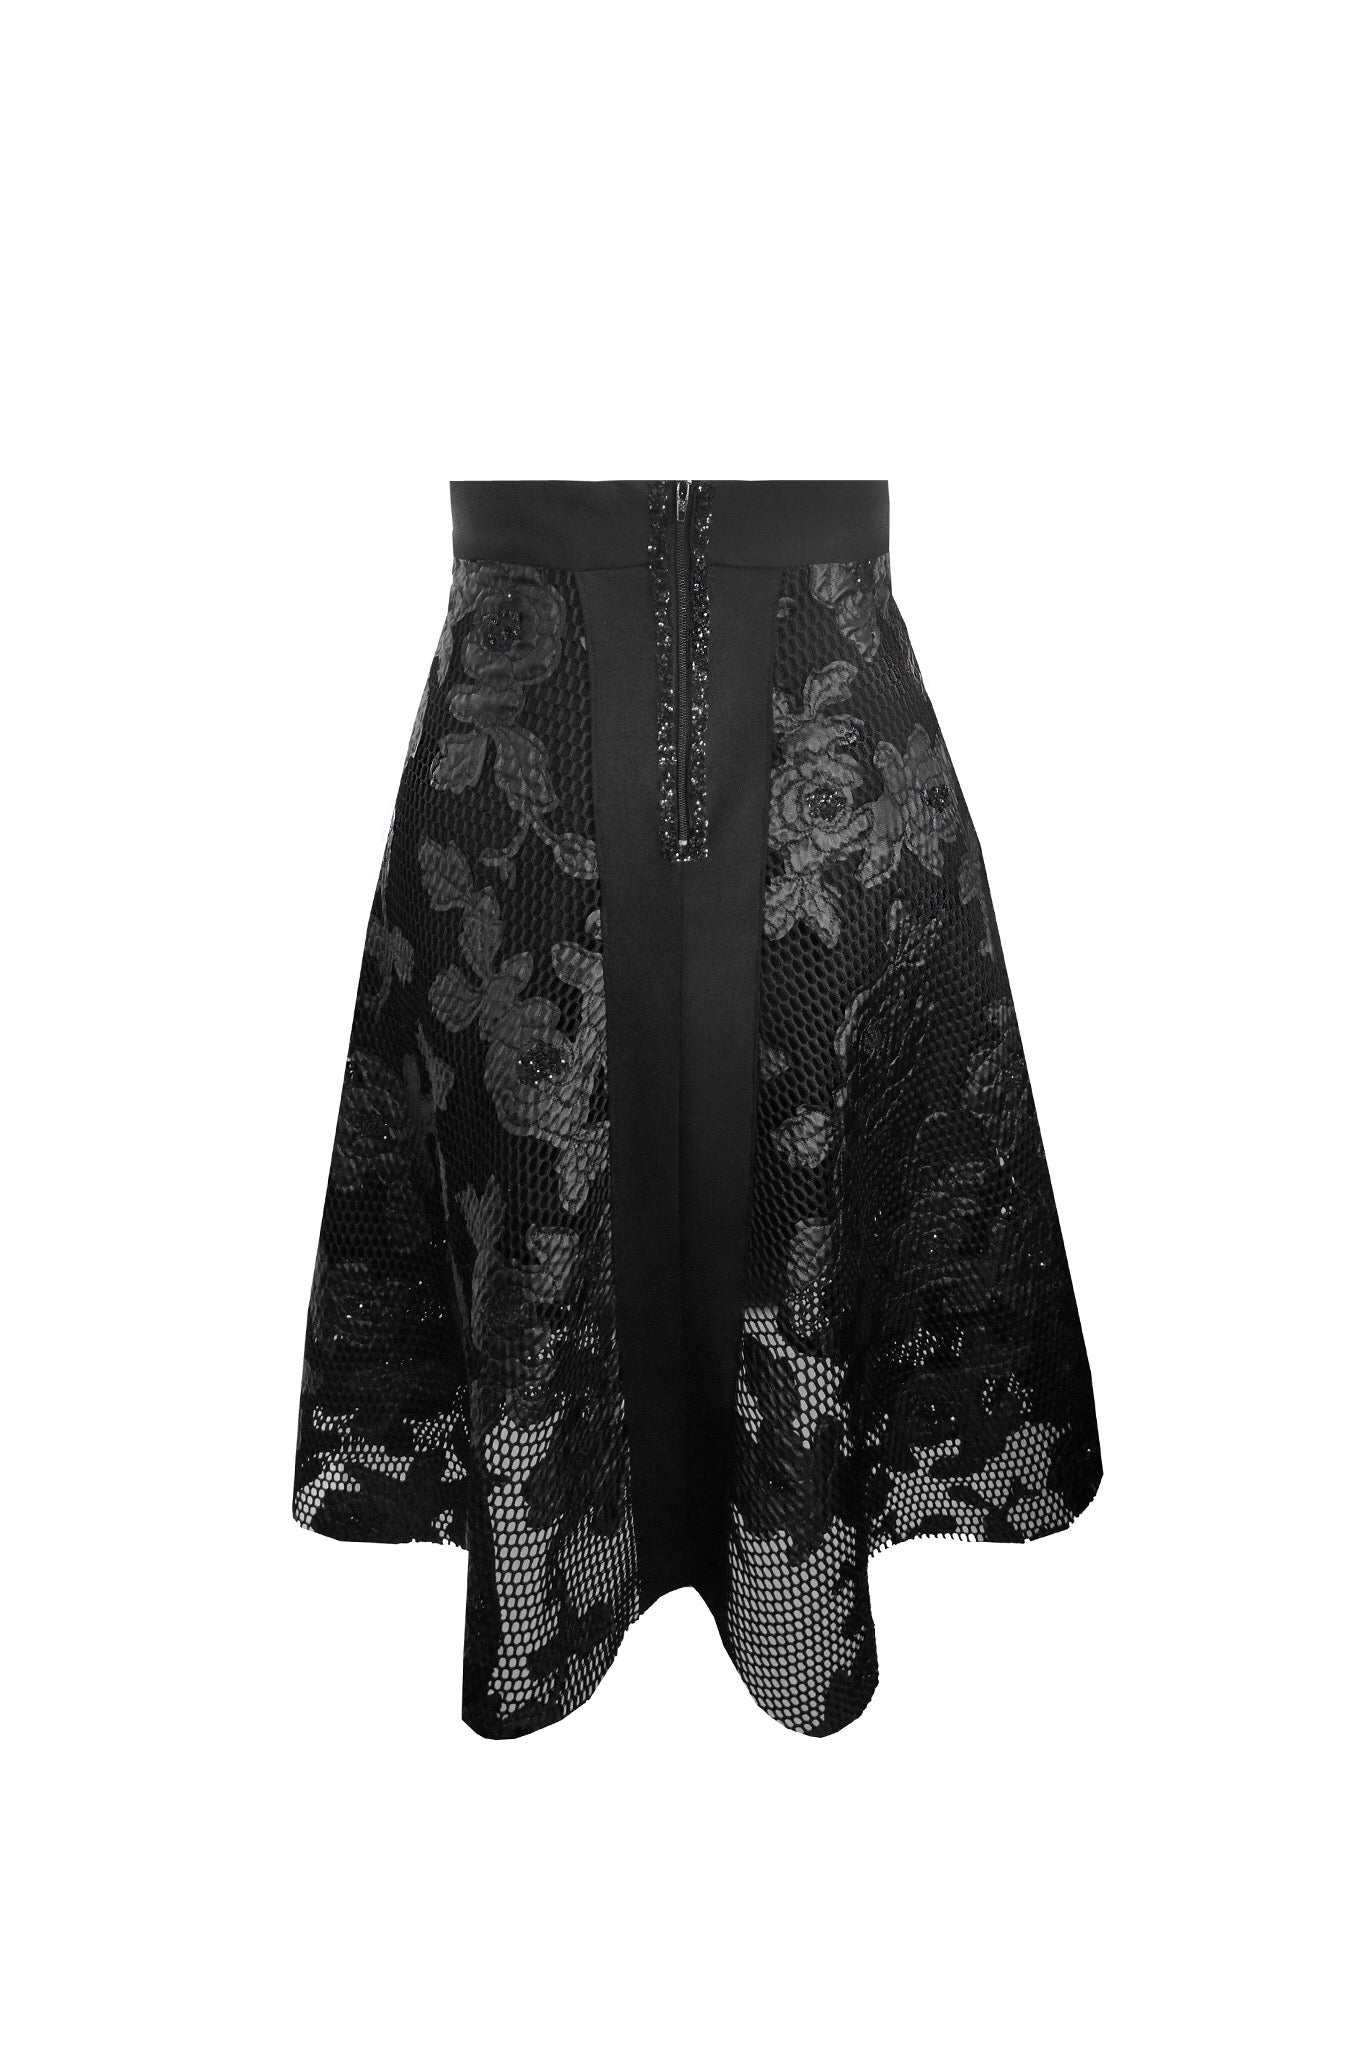 High waist black leather flower net skirt